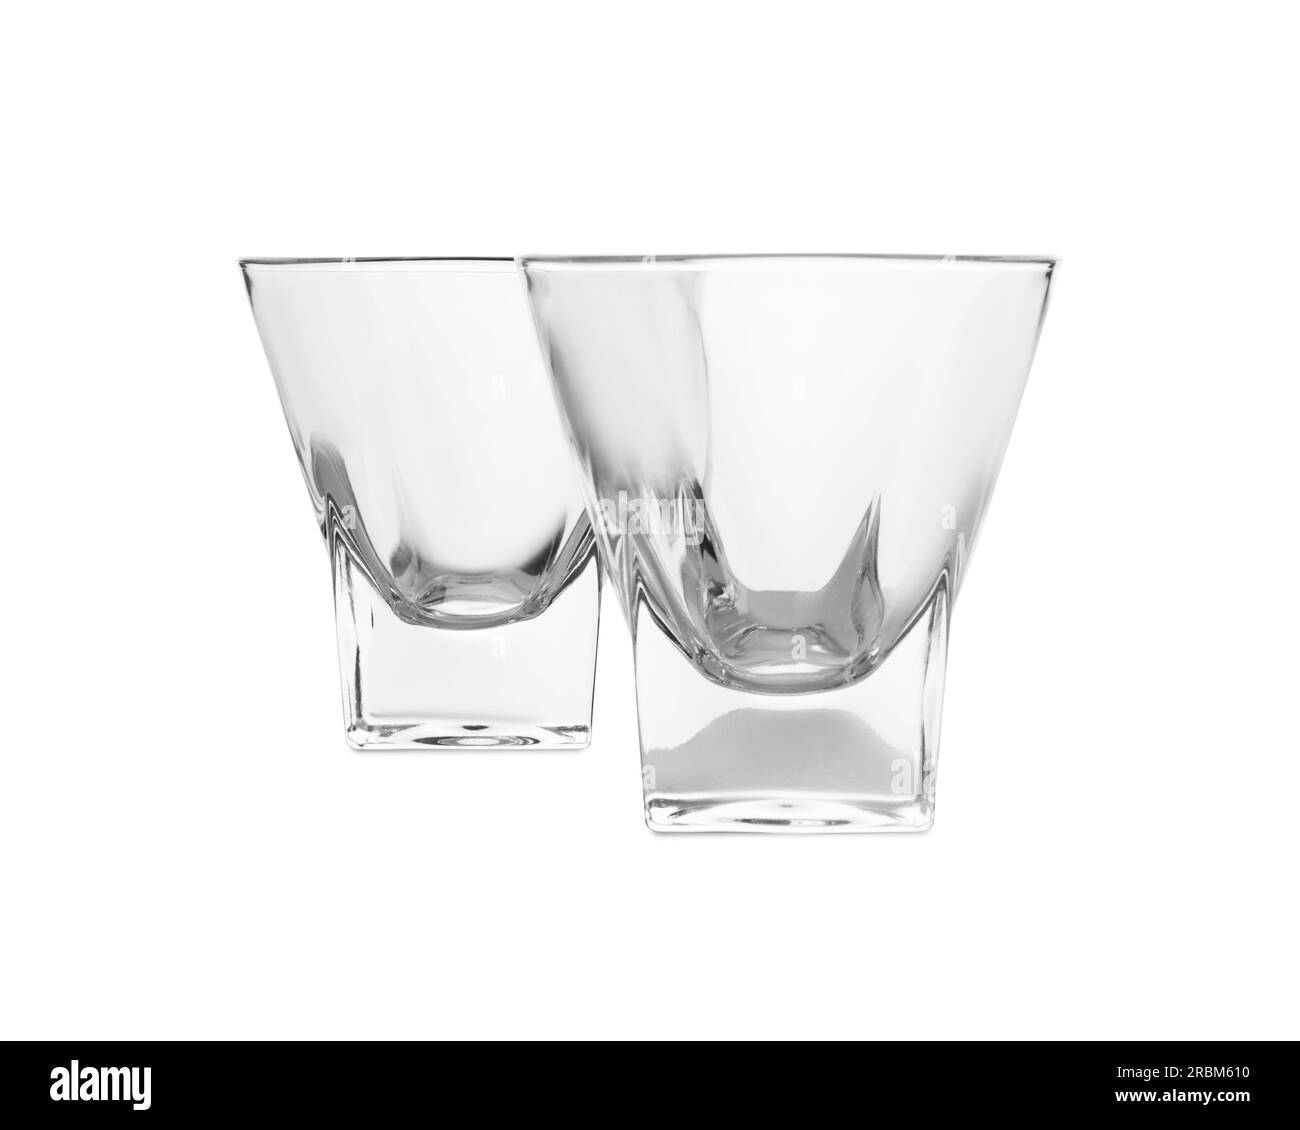 https://c8.alamy.com/comp/2RBM610/elegant-clean-empty-shot-glasses-isolated-on-white-2RBM610.jpg